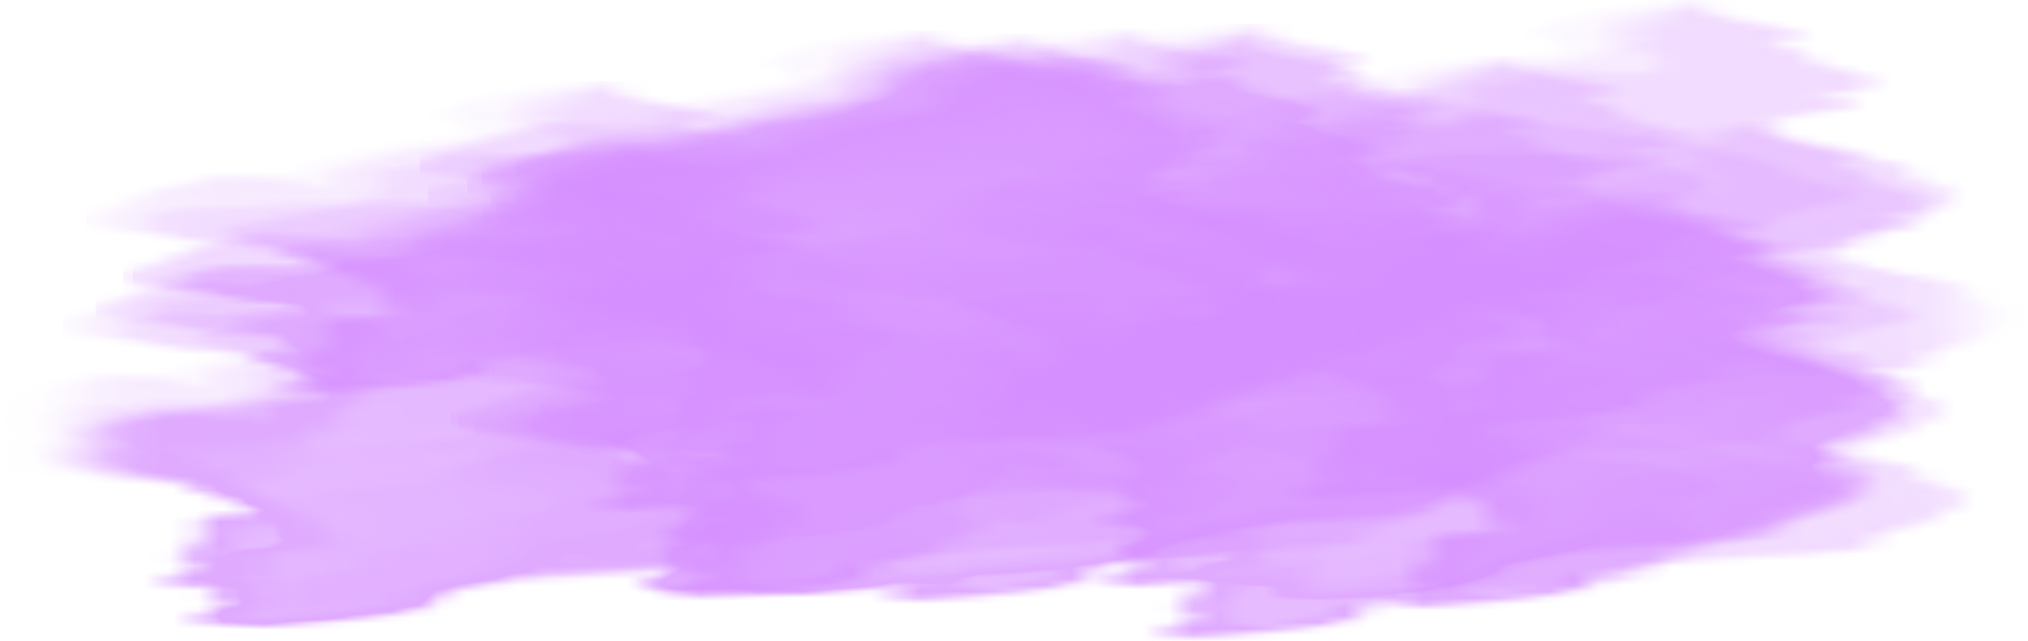 Purple watercolor